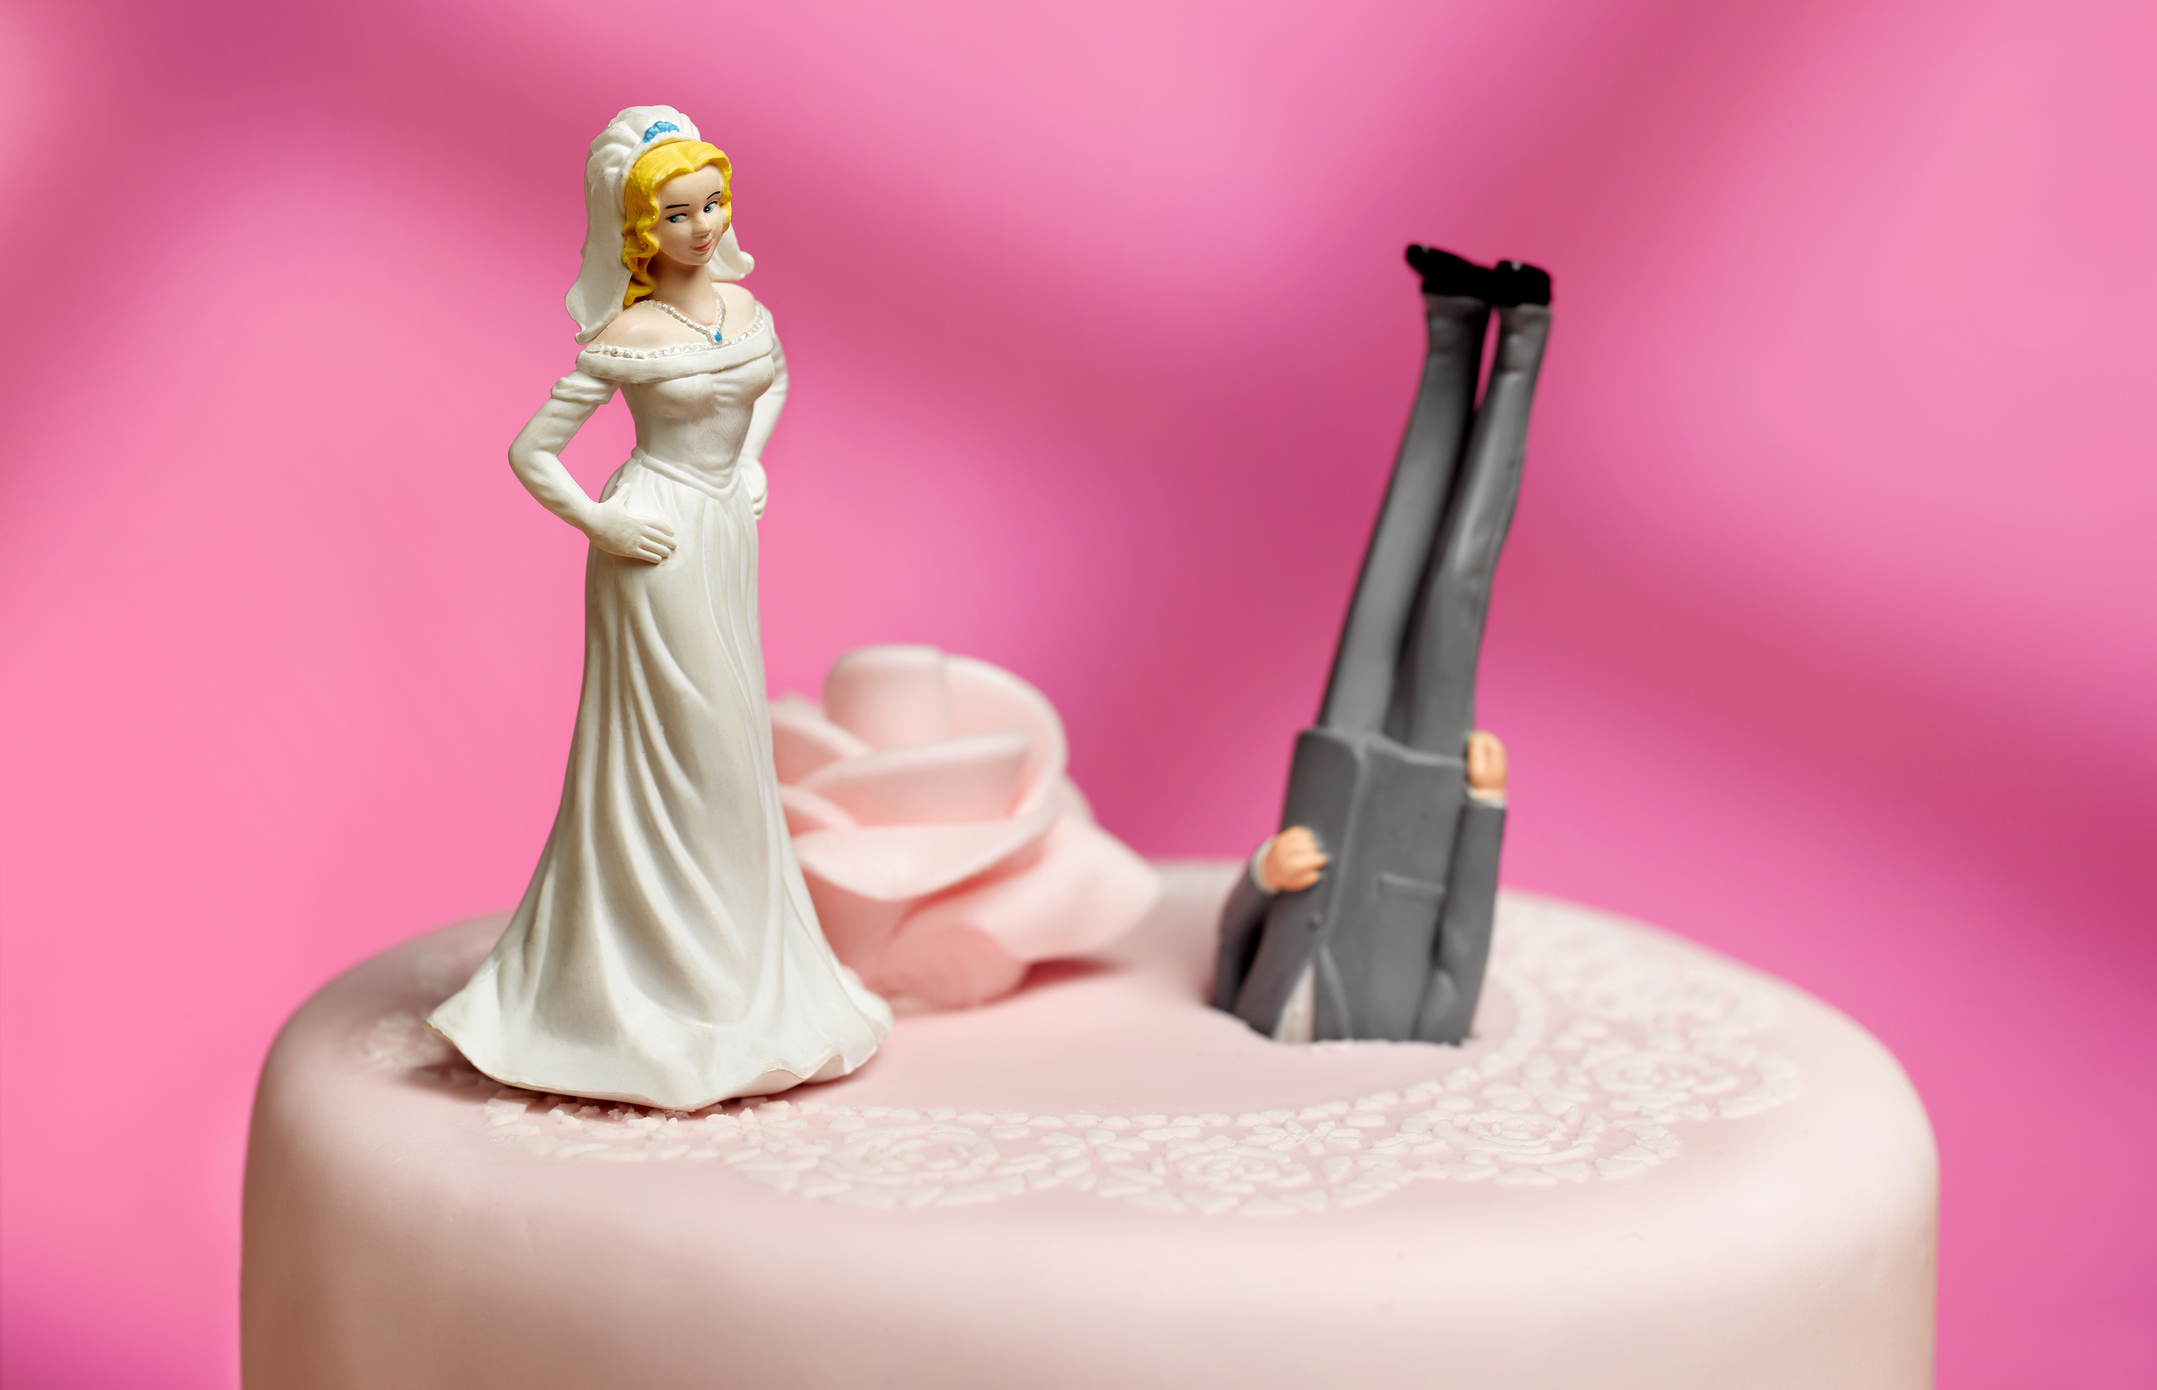 Bride figurine on cake with groom figurine legs upside down, indicating playful wedding cake topper